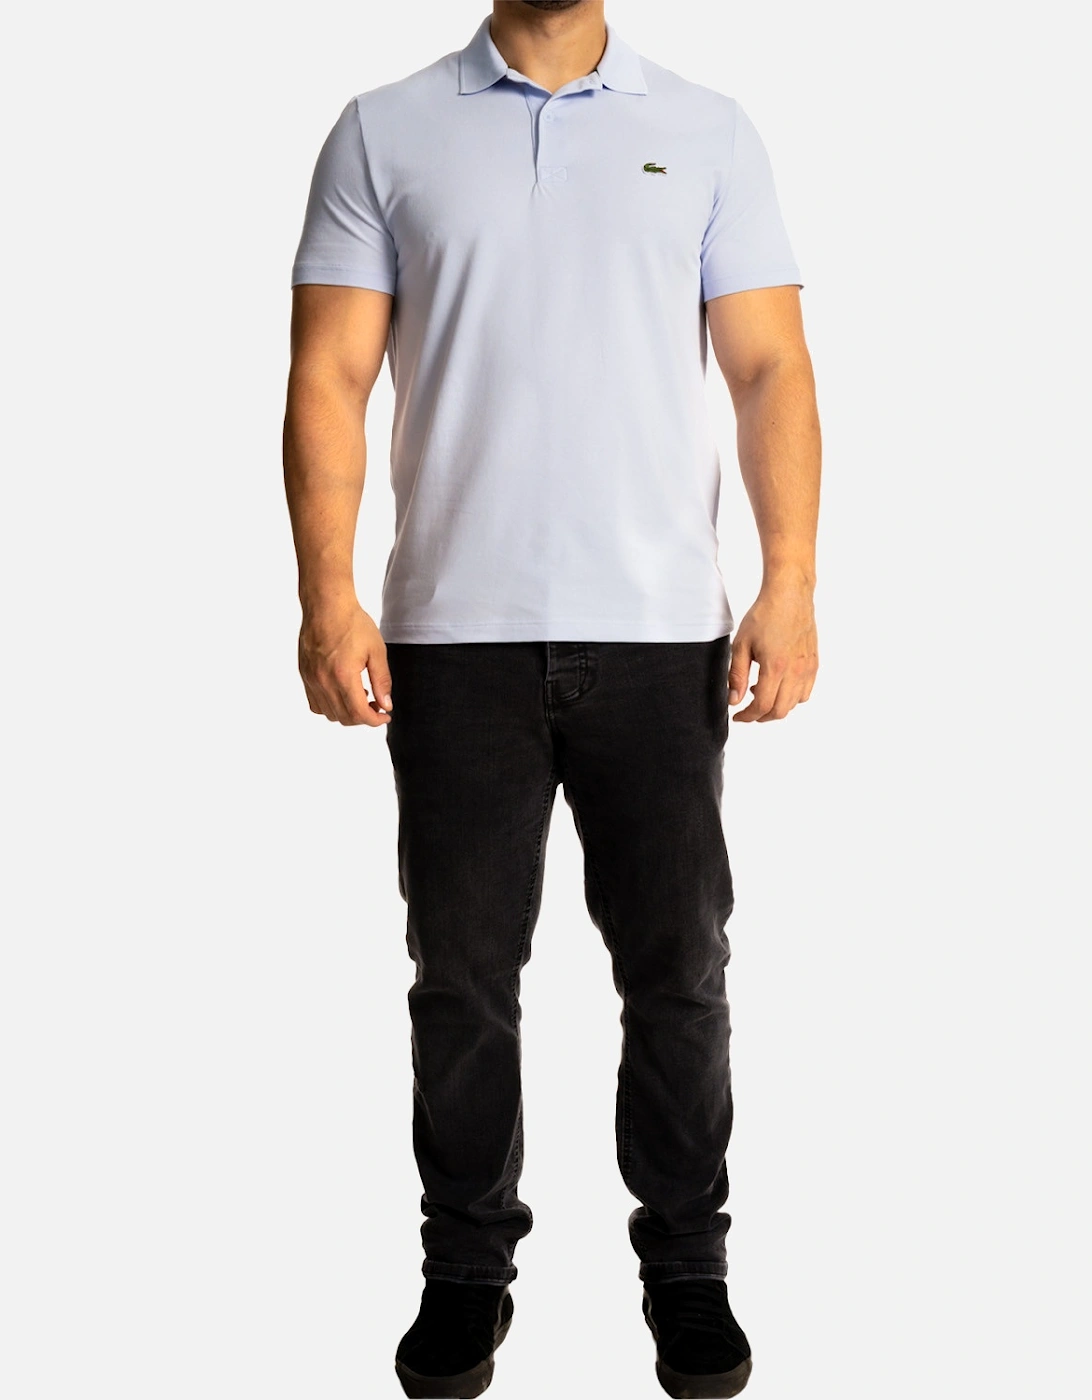 Mens S/S Stretch Polo Shirt (Pale Blue)